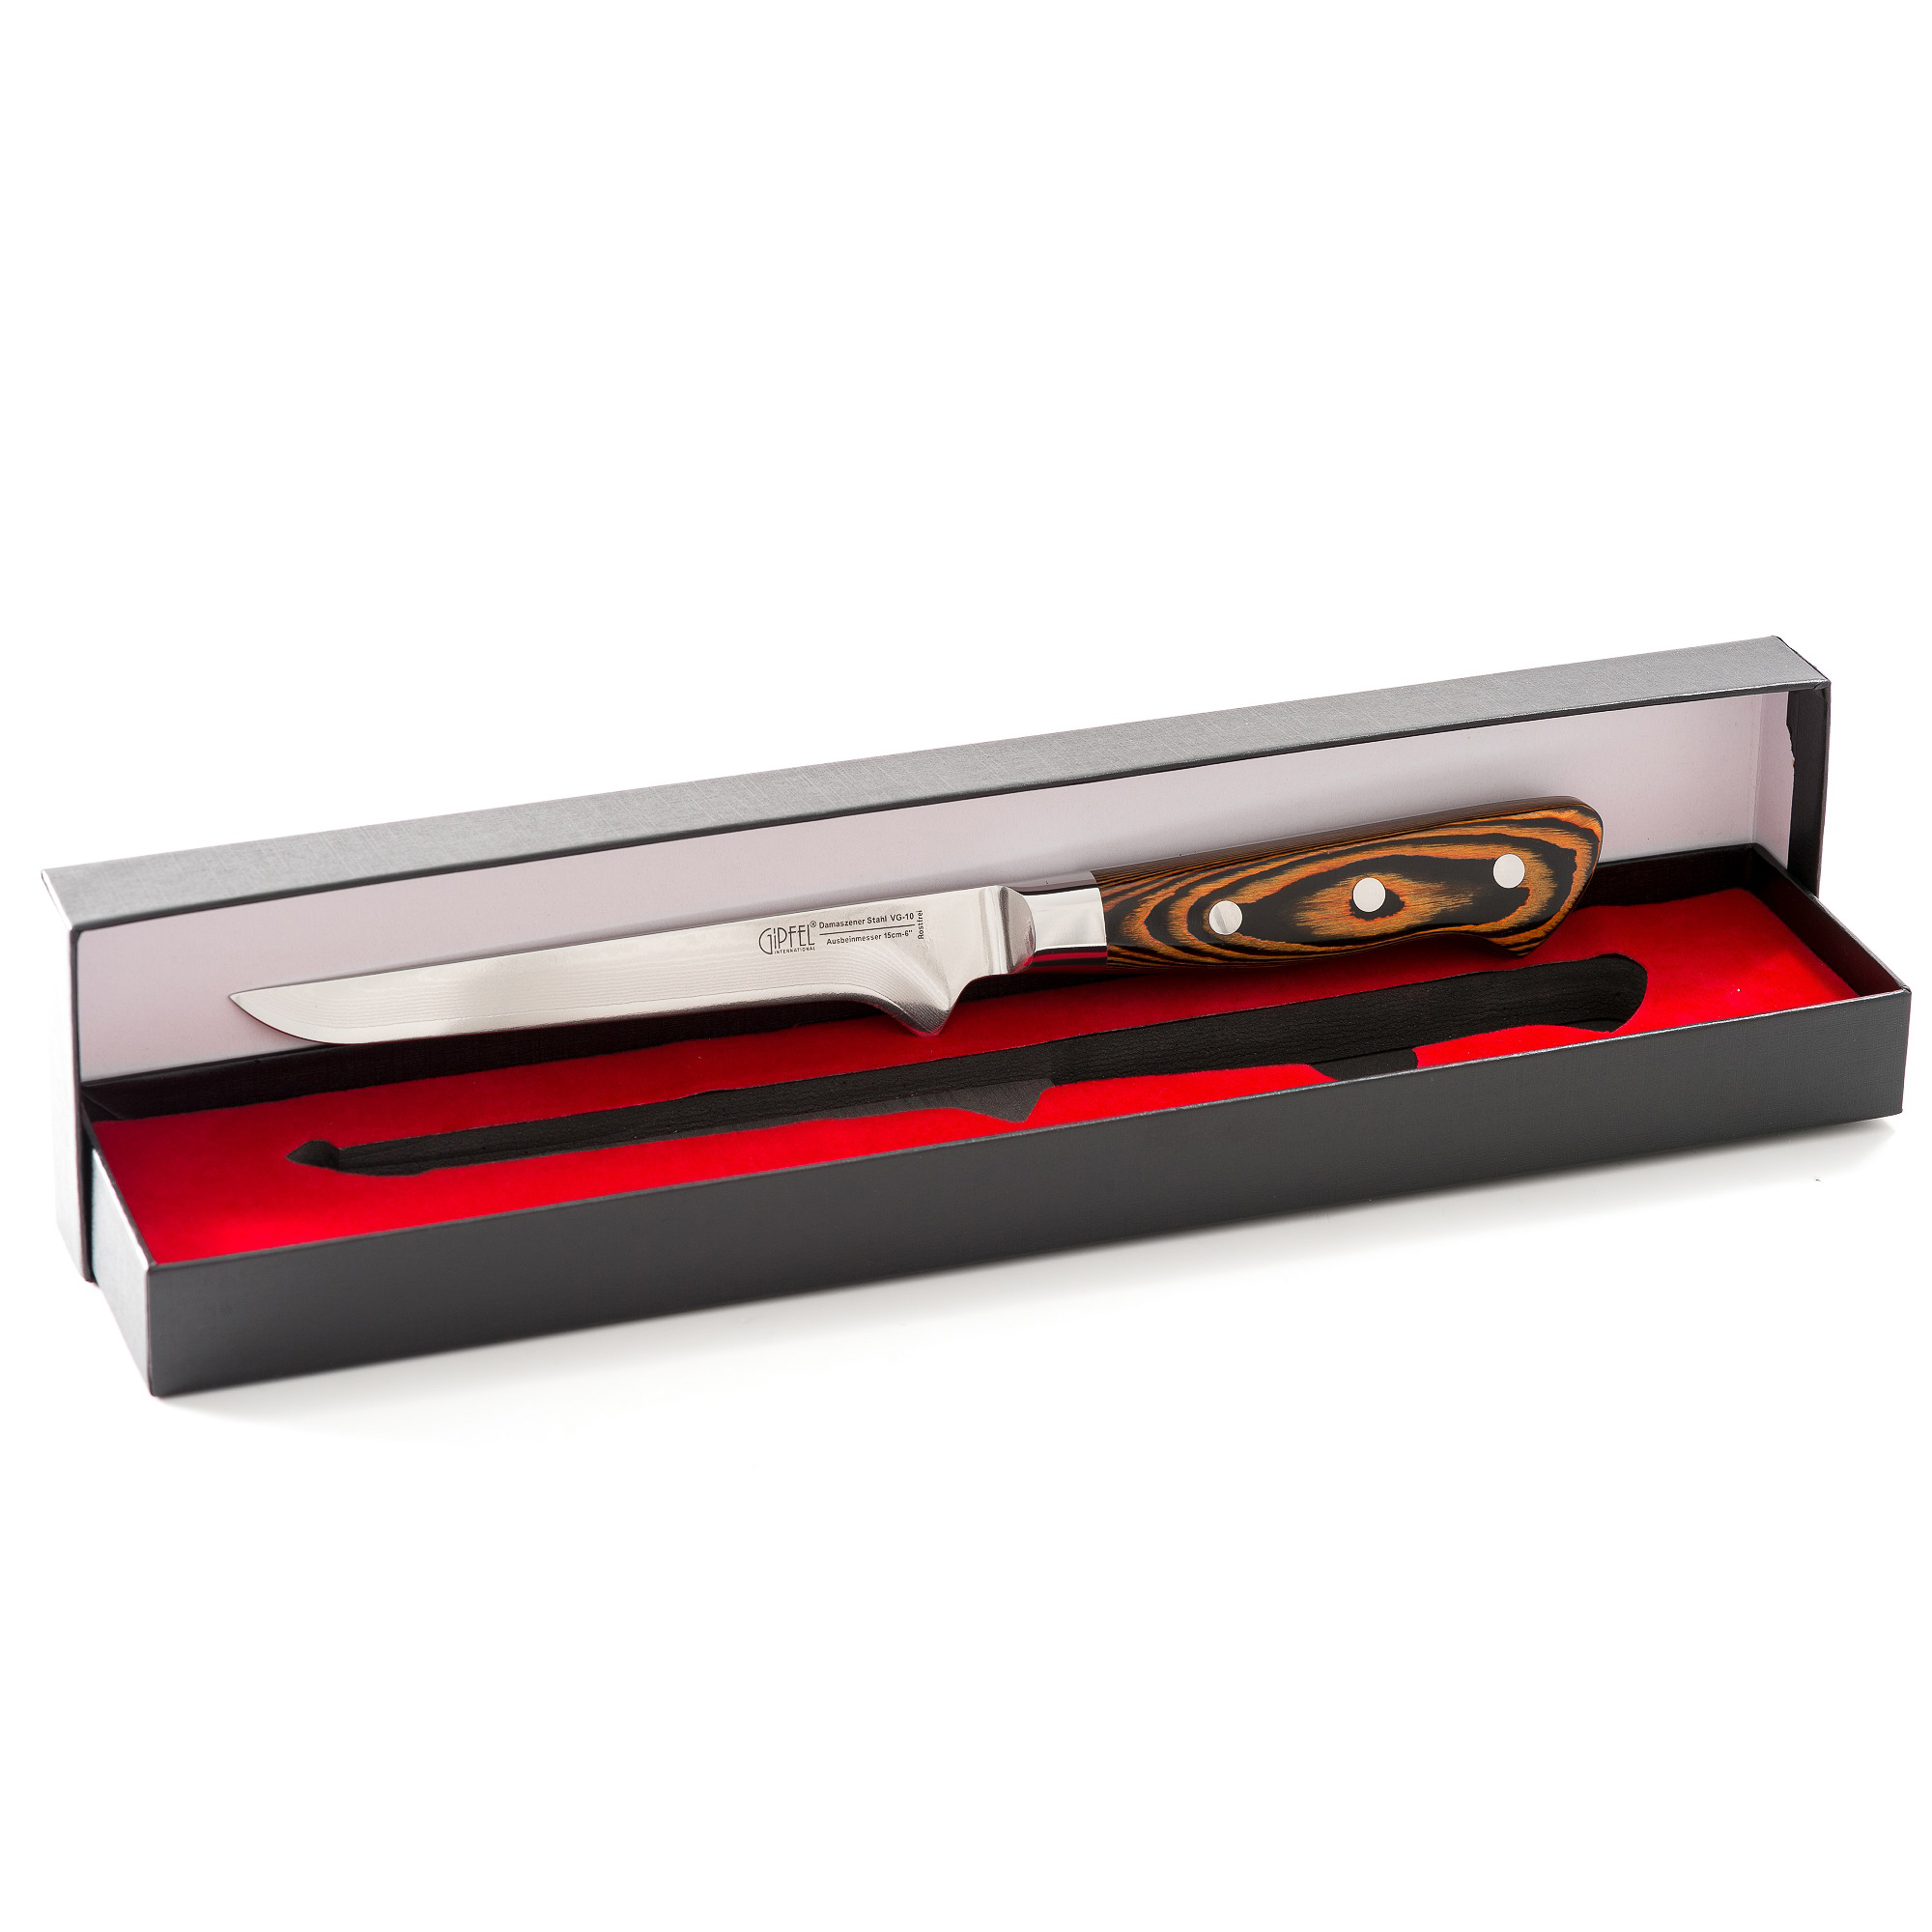 Нож обвалочный Kyoto Gipfel нож pintinox обвалочный 15 см